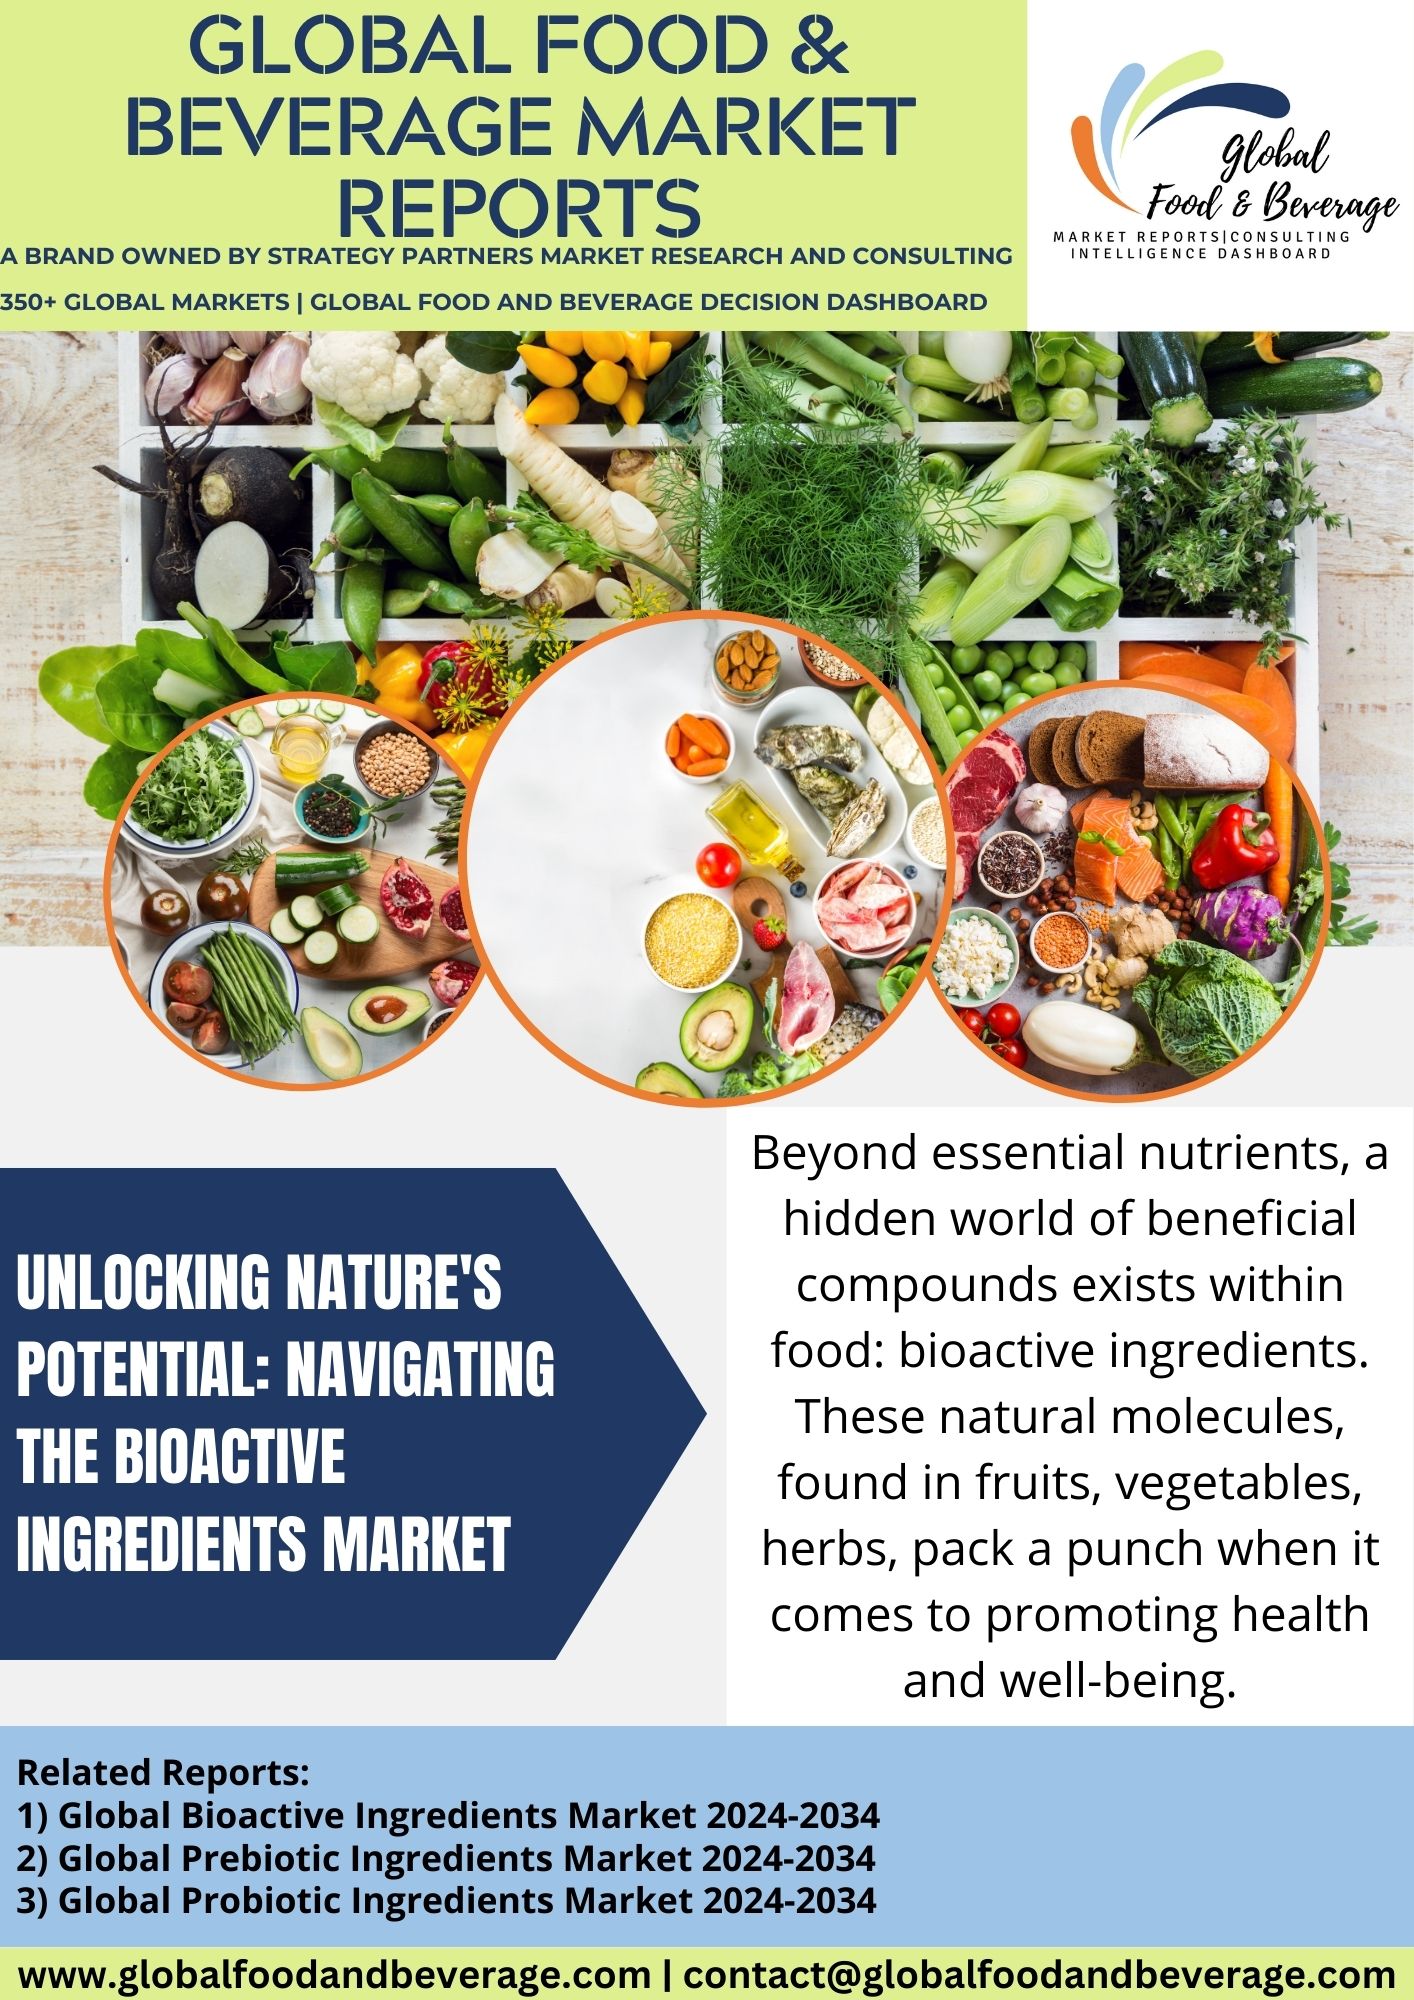 Unlocking Nature’s Potential: Navigating the Bioactive Ingredients Market